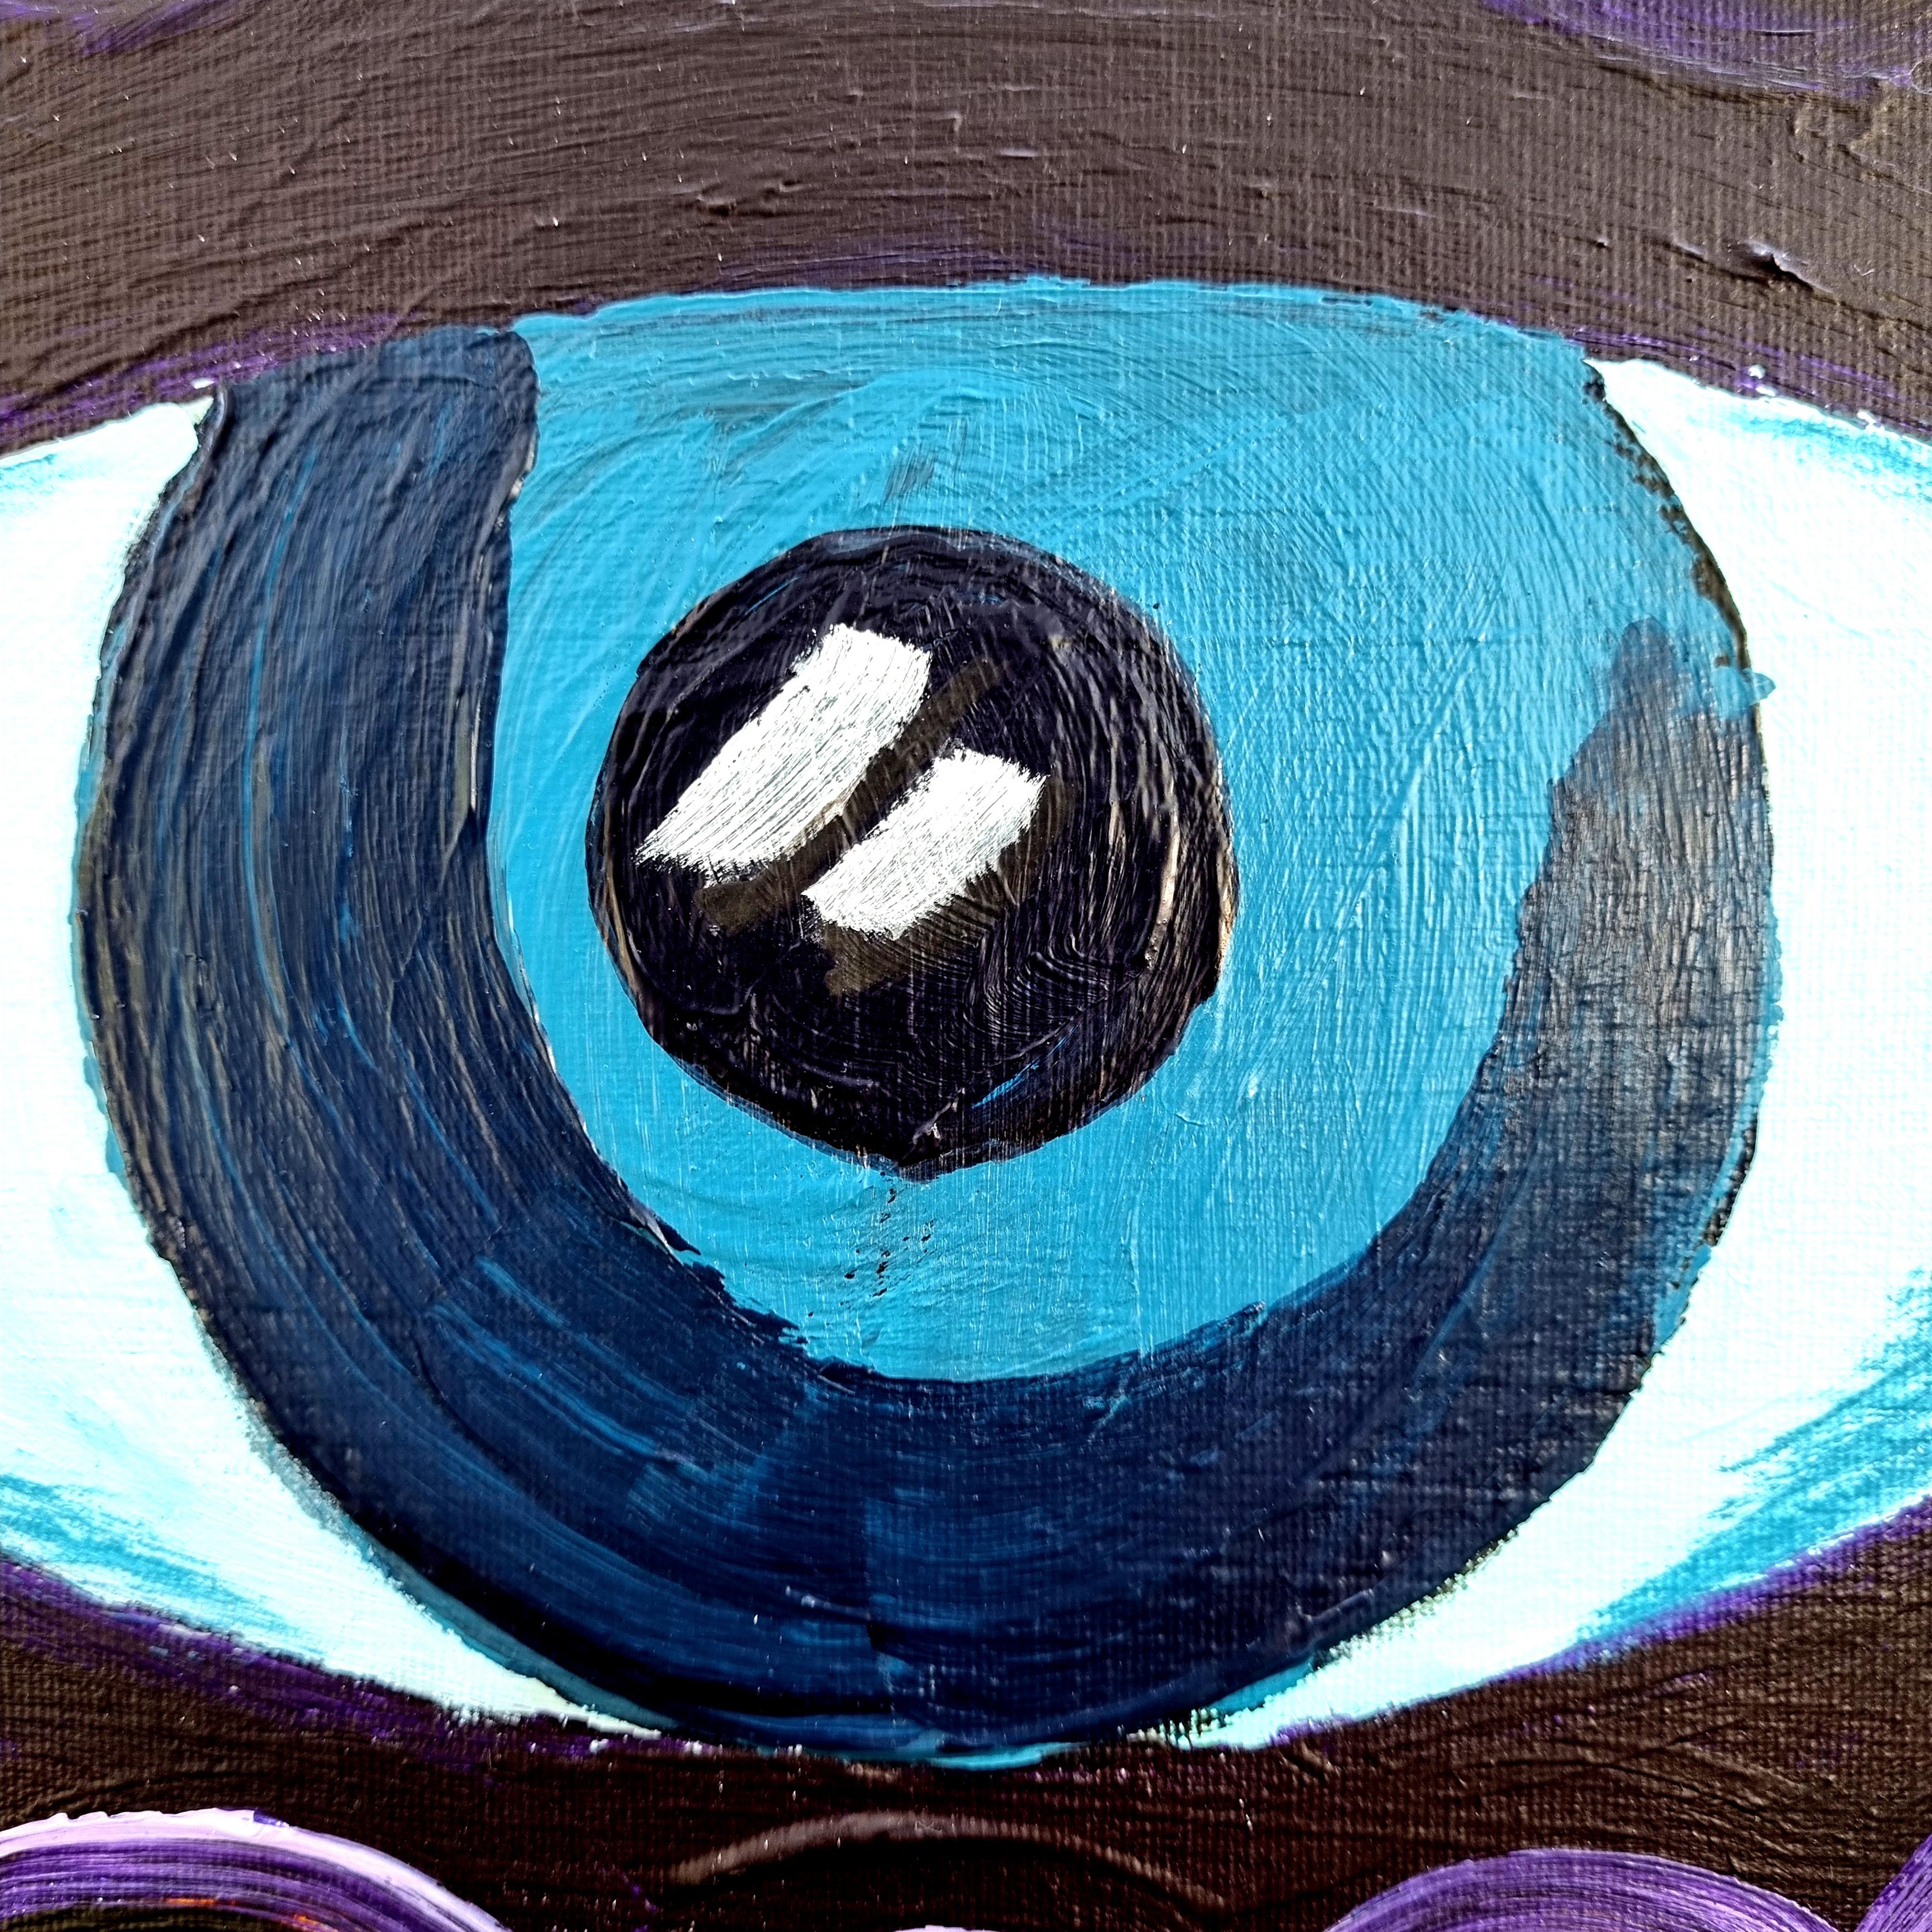  R. Poch. Two Woman Blue  Eyes original acrylic canvas painting 4